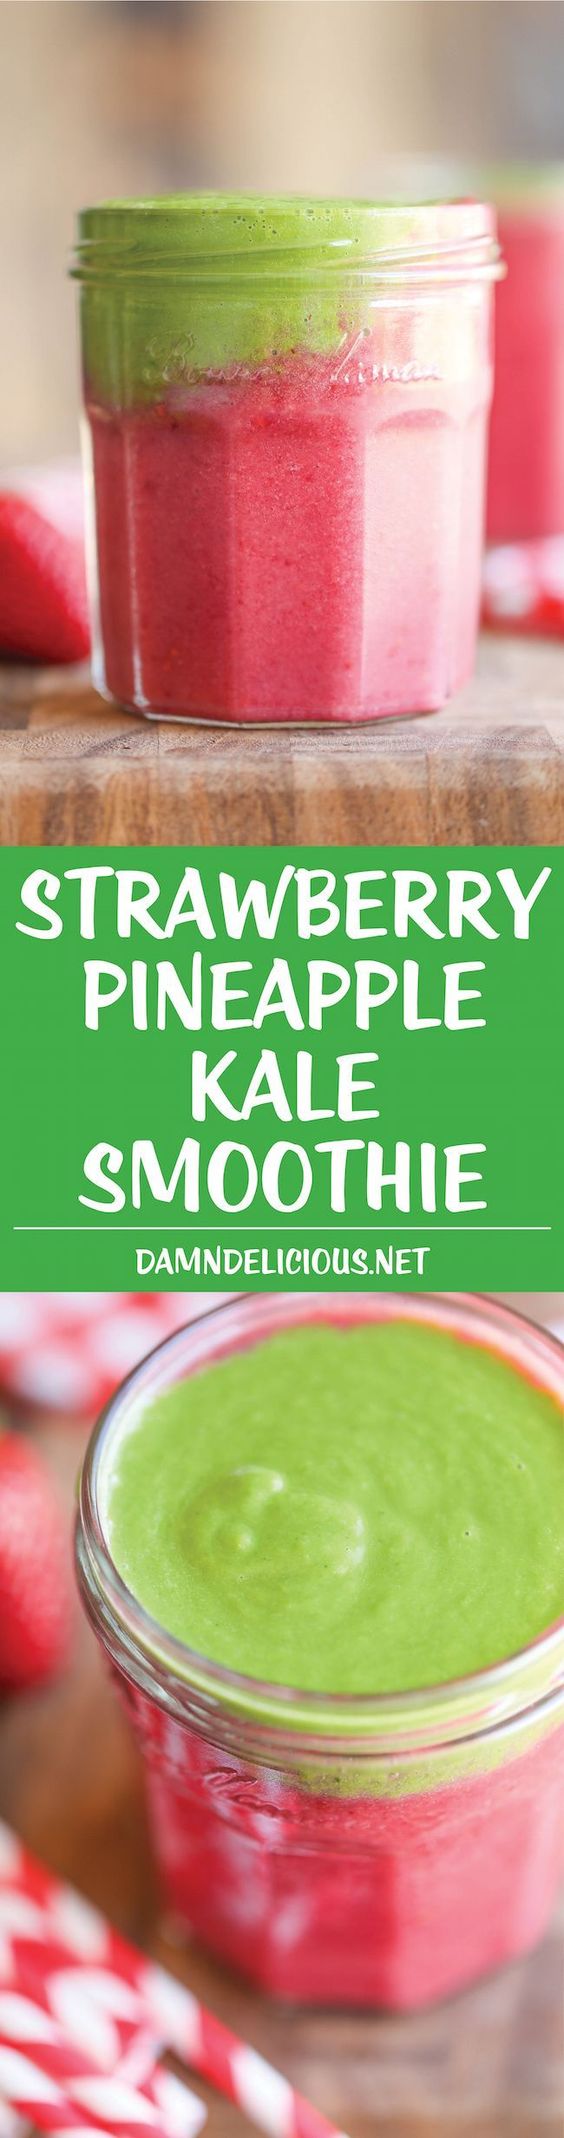 Strawberry-Pineapple-Kale-Smoothie